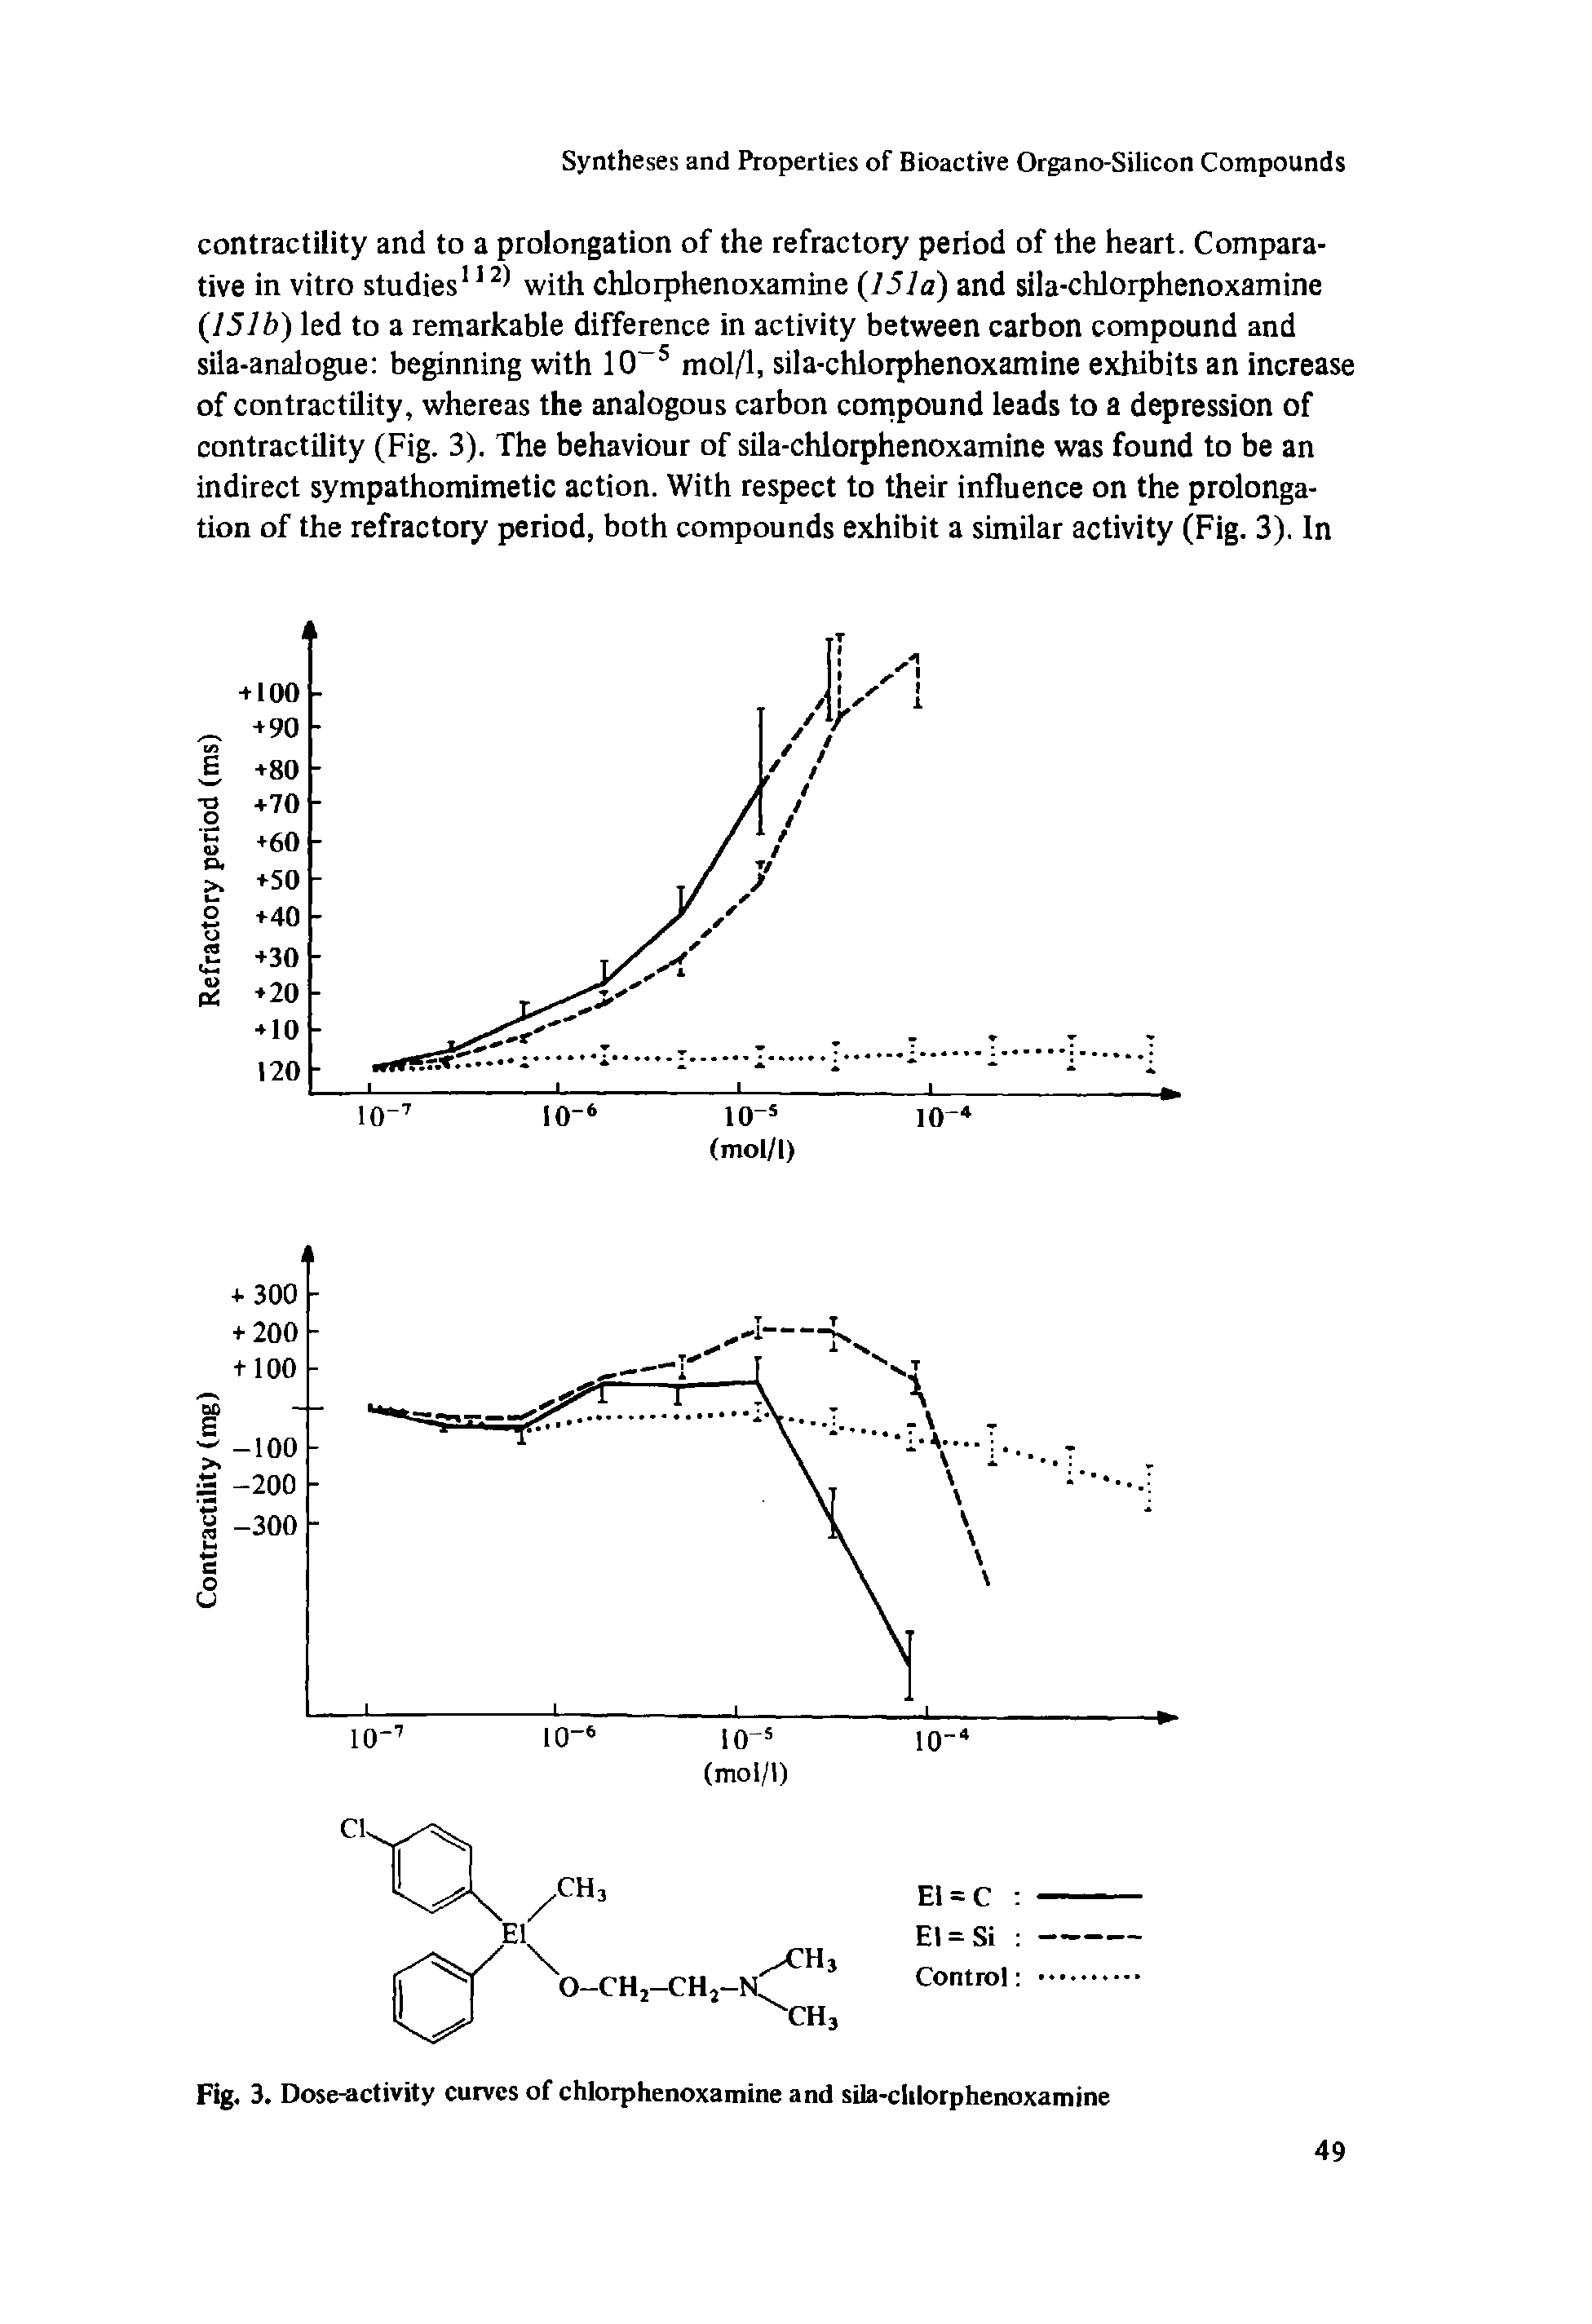 Fig. 3. Dose-activity curves of chlorphenoxamine and sila-clilorphenoxamine...